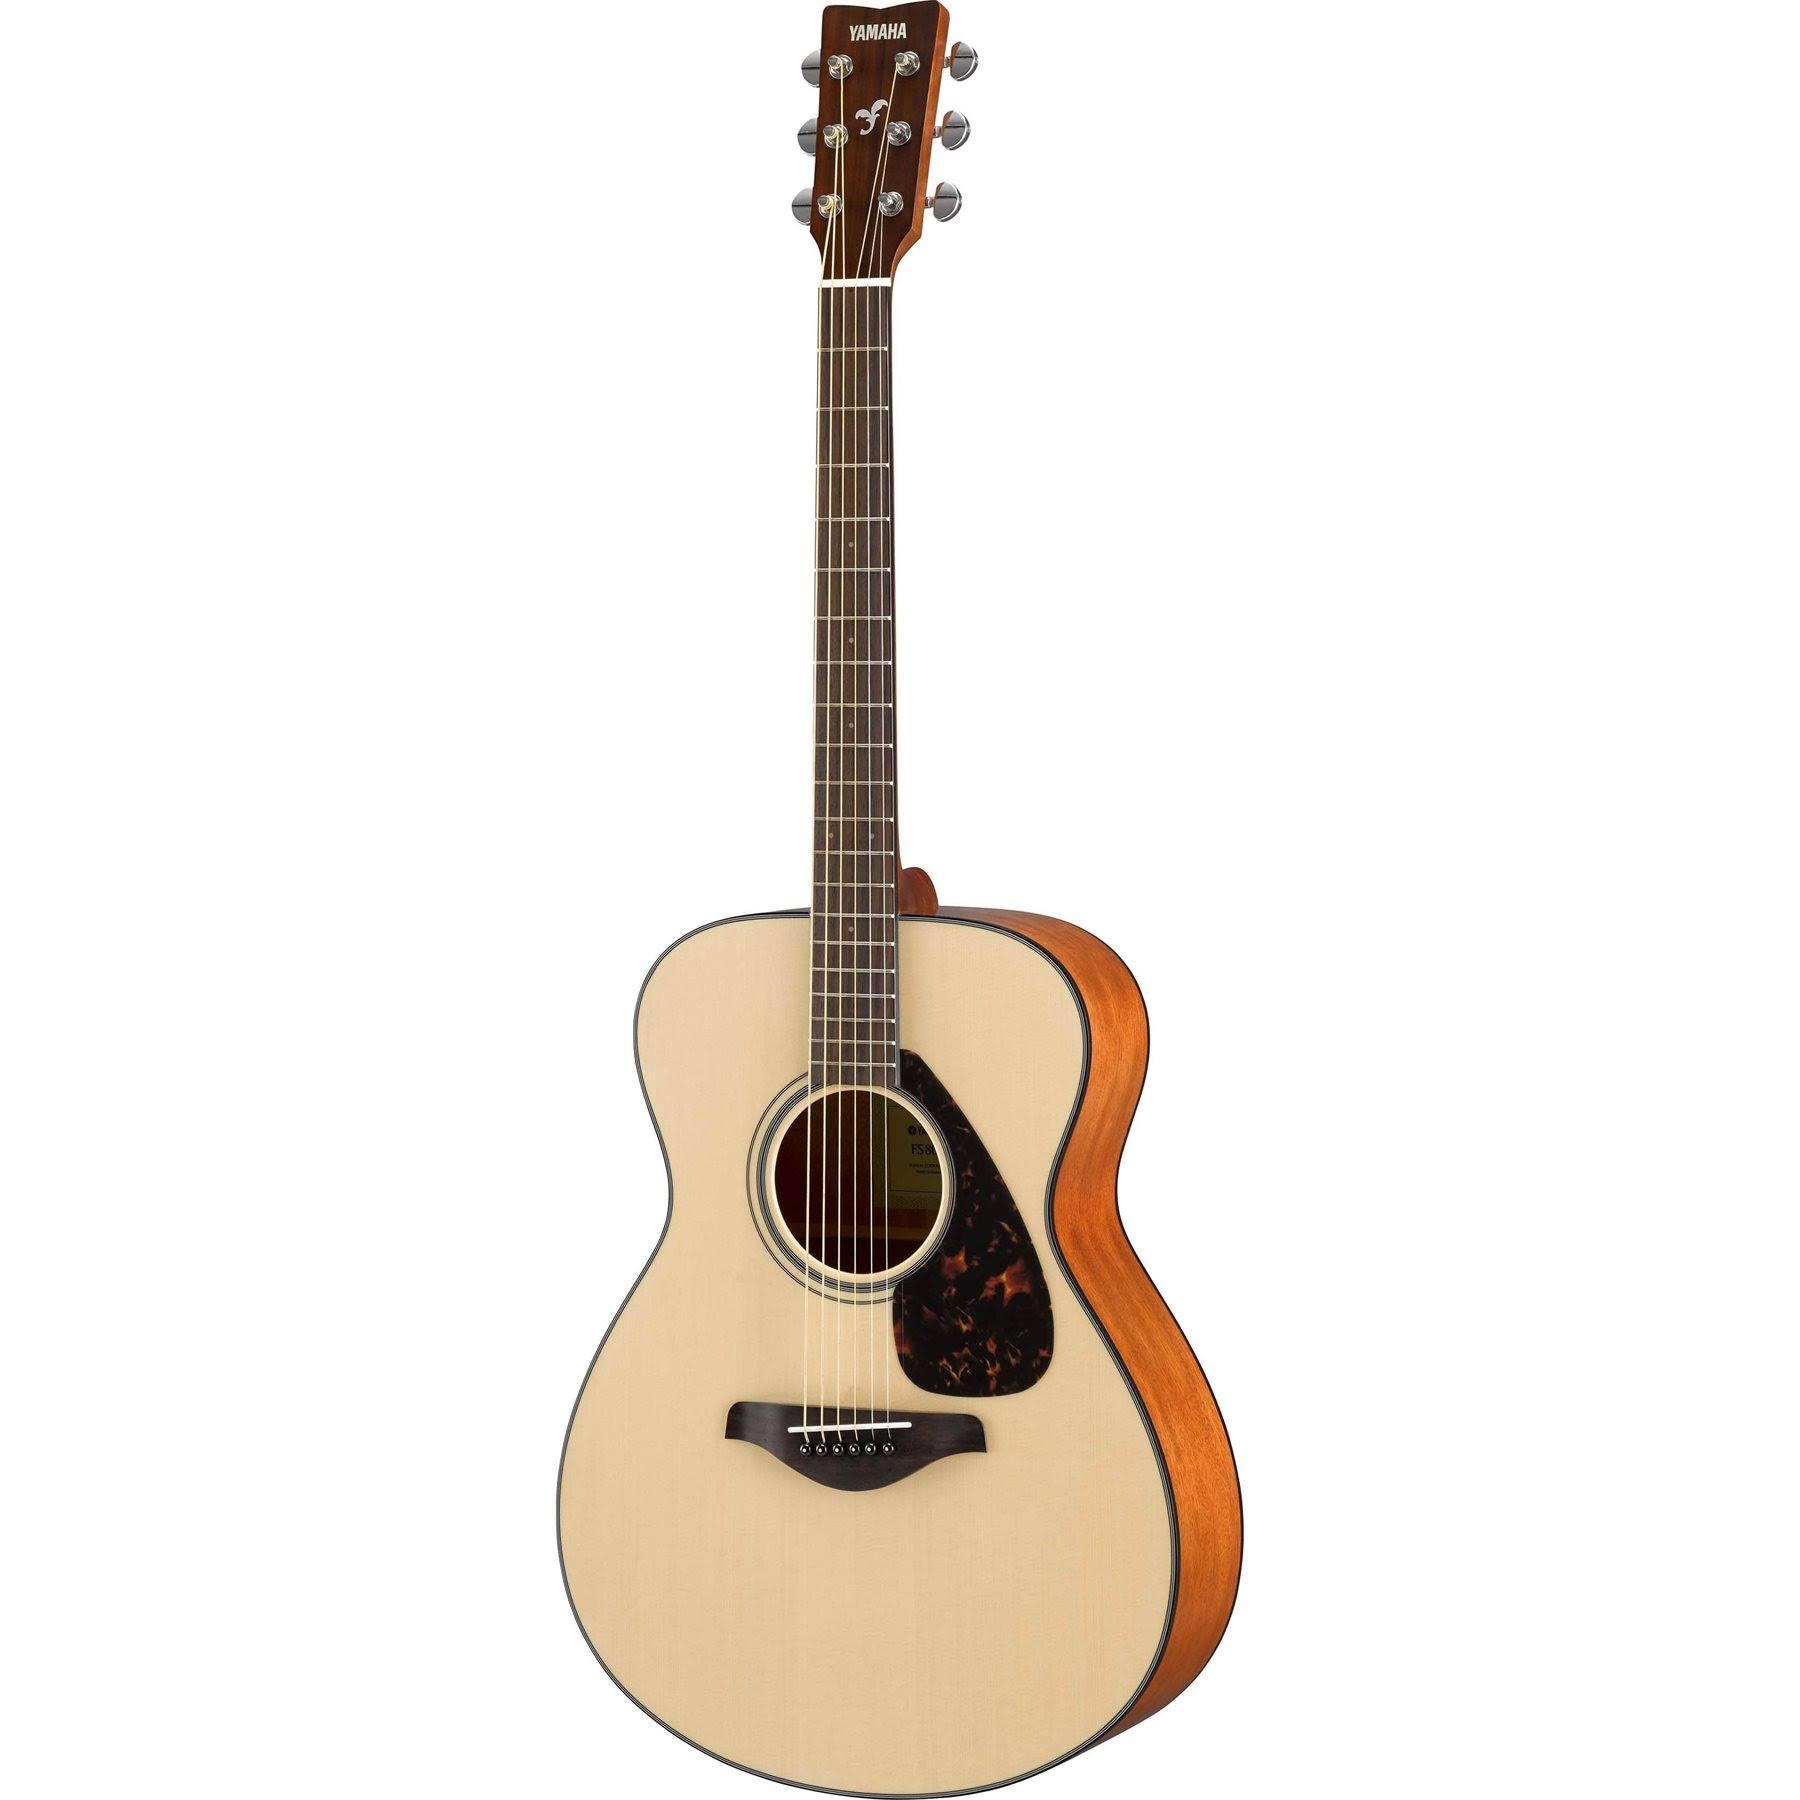 Yamaha FS800 Solid Top Acoustic Guitar - Small, Natural